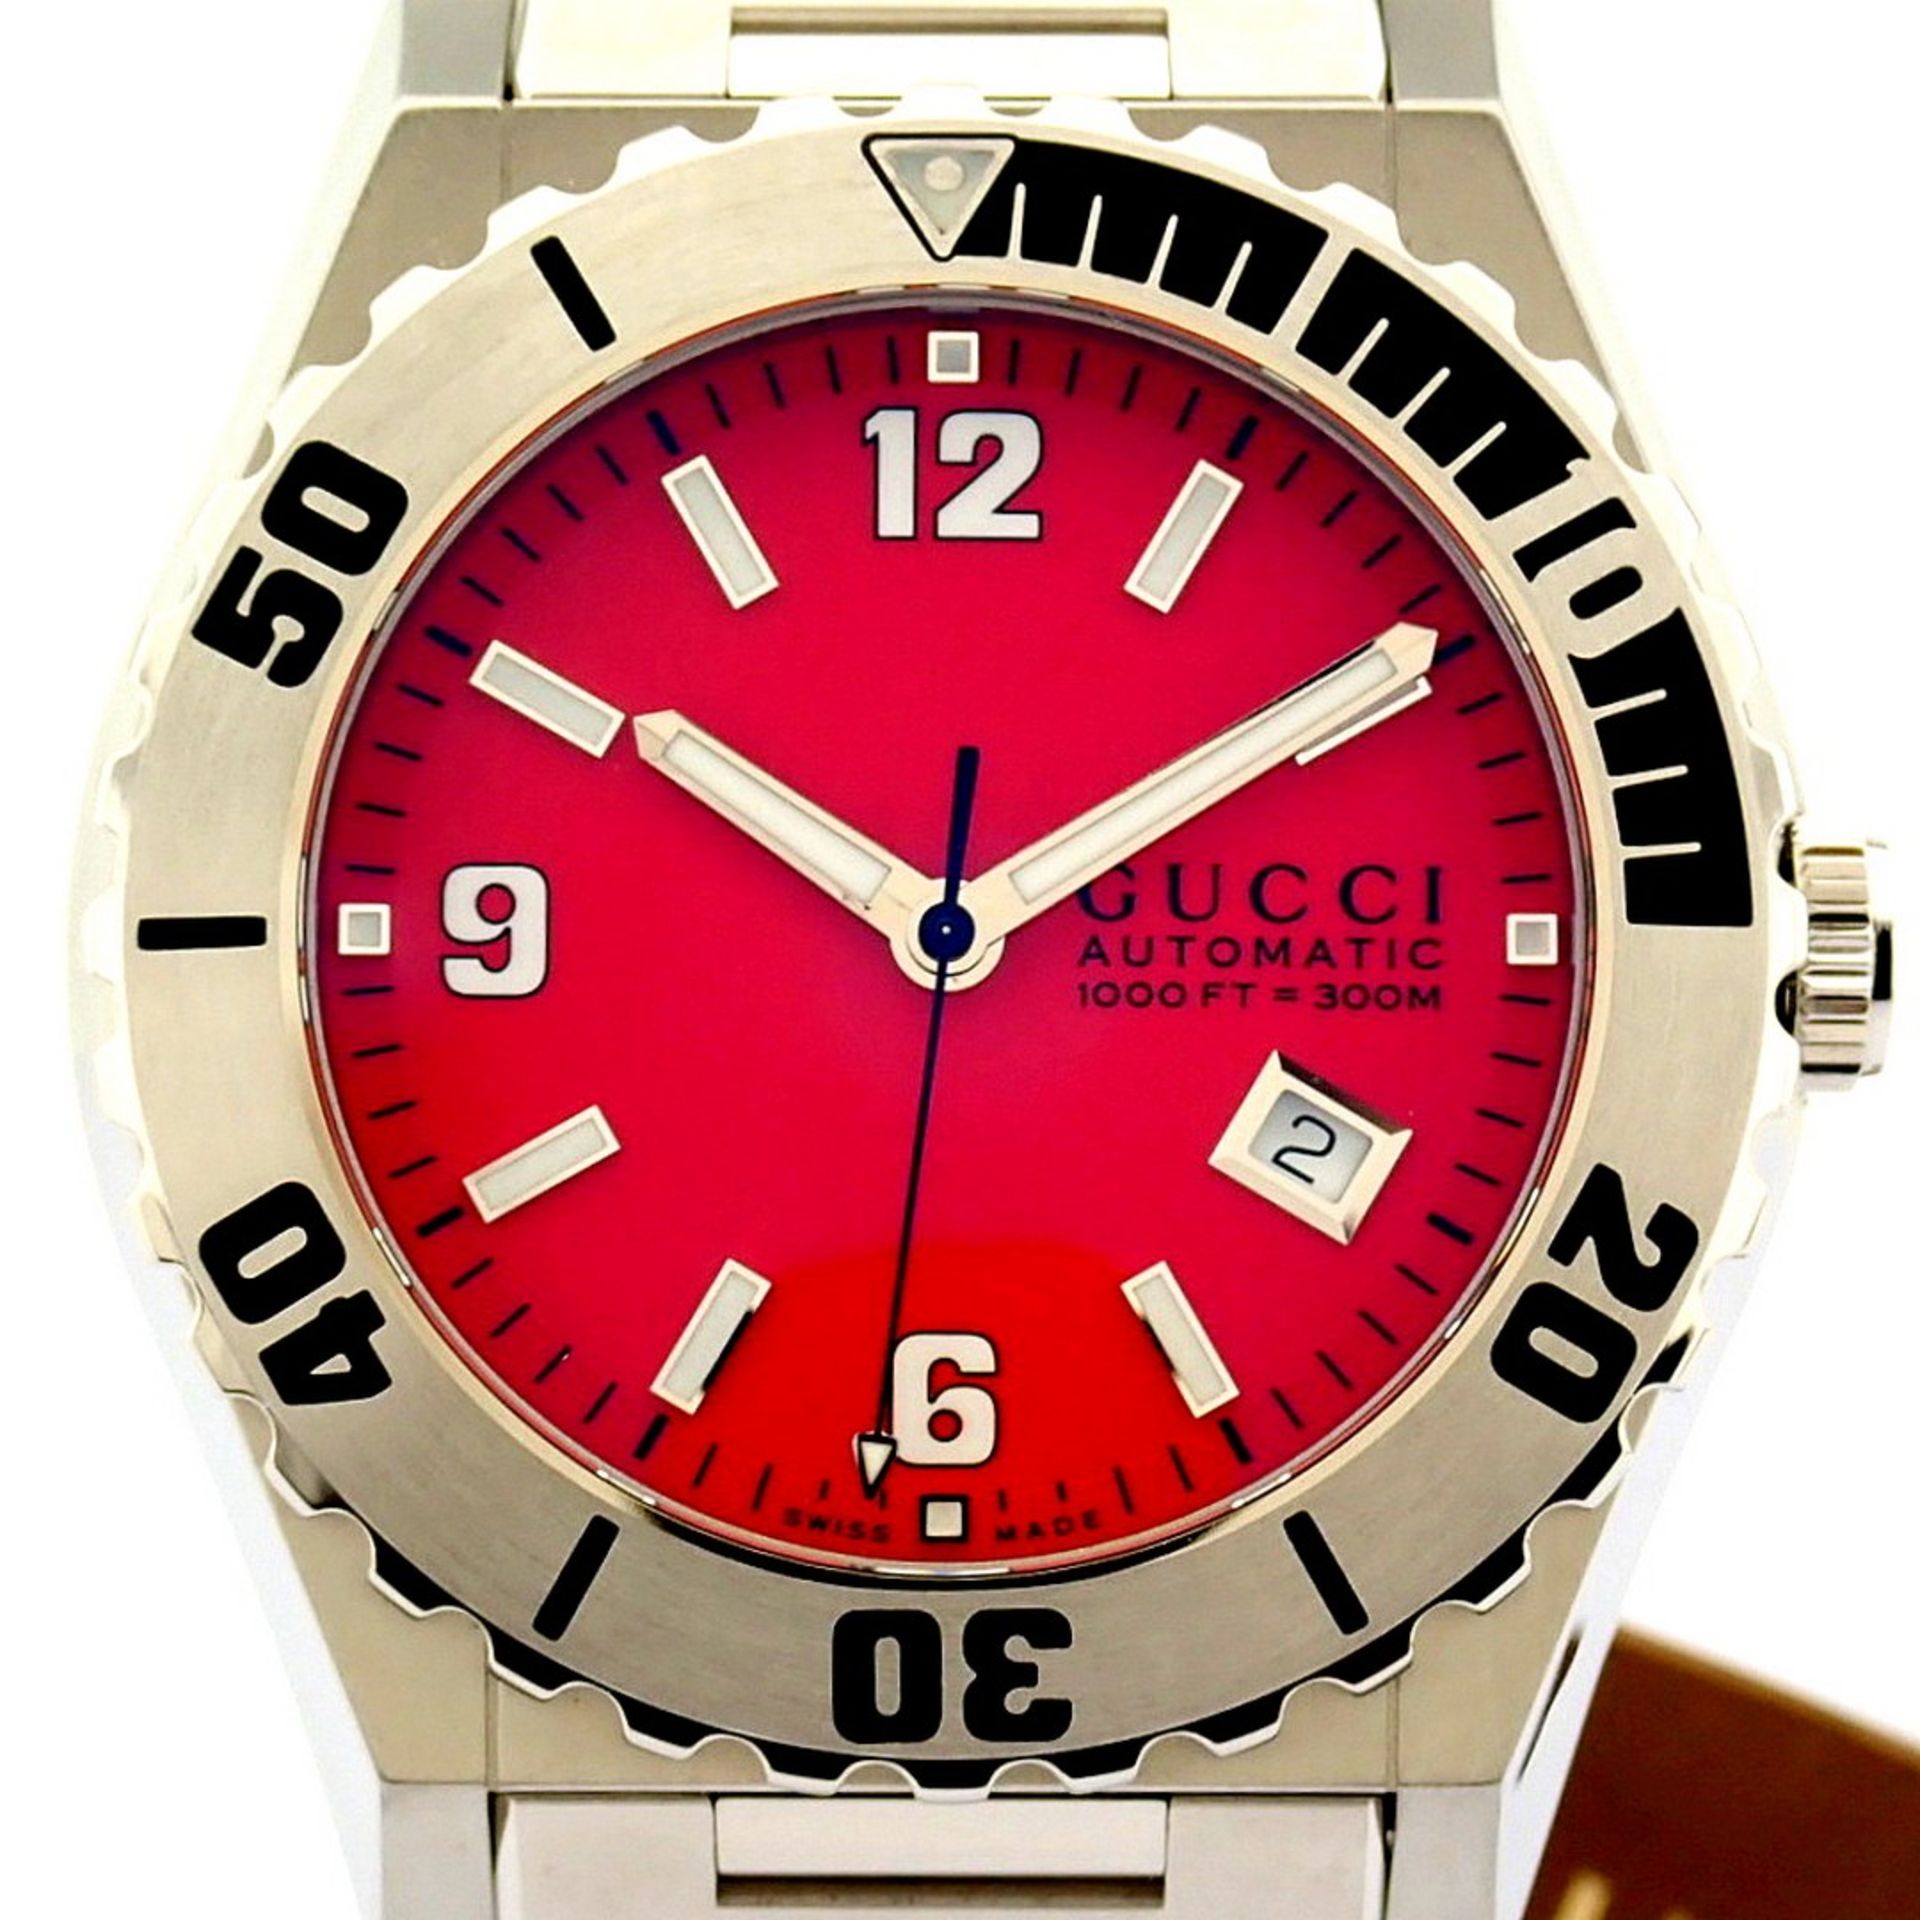 Gucci / Pantheon 115.2 (Brand New) - Gentlemen's Steel Wristwatch - Image 3 of 11